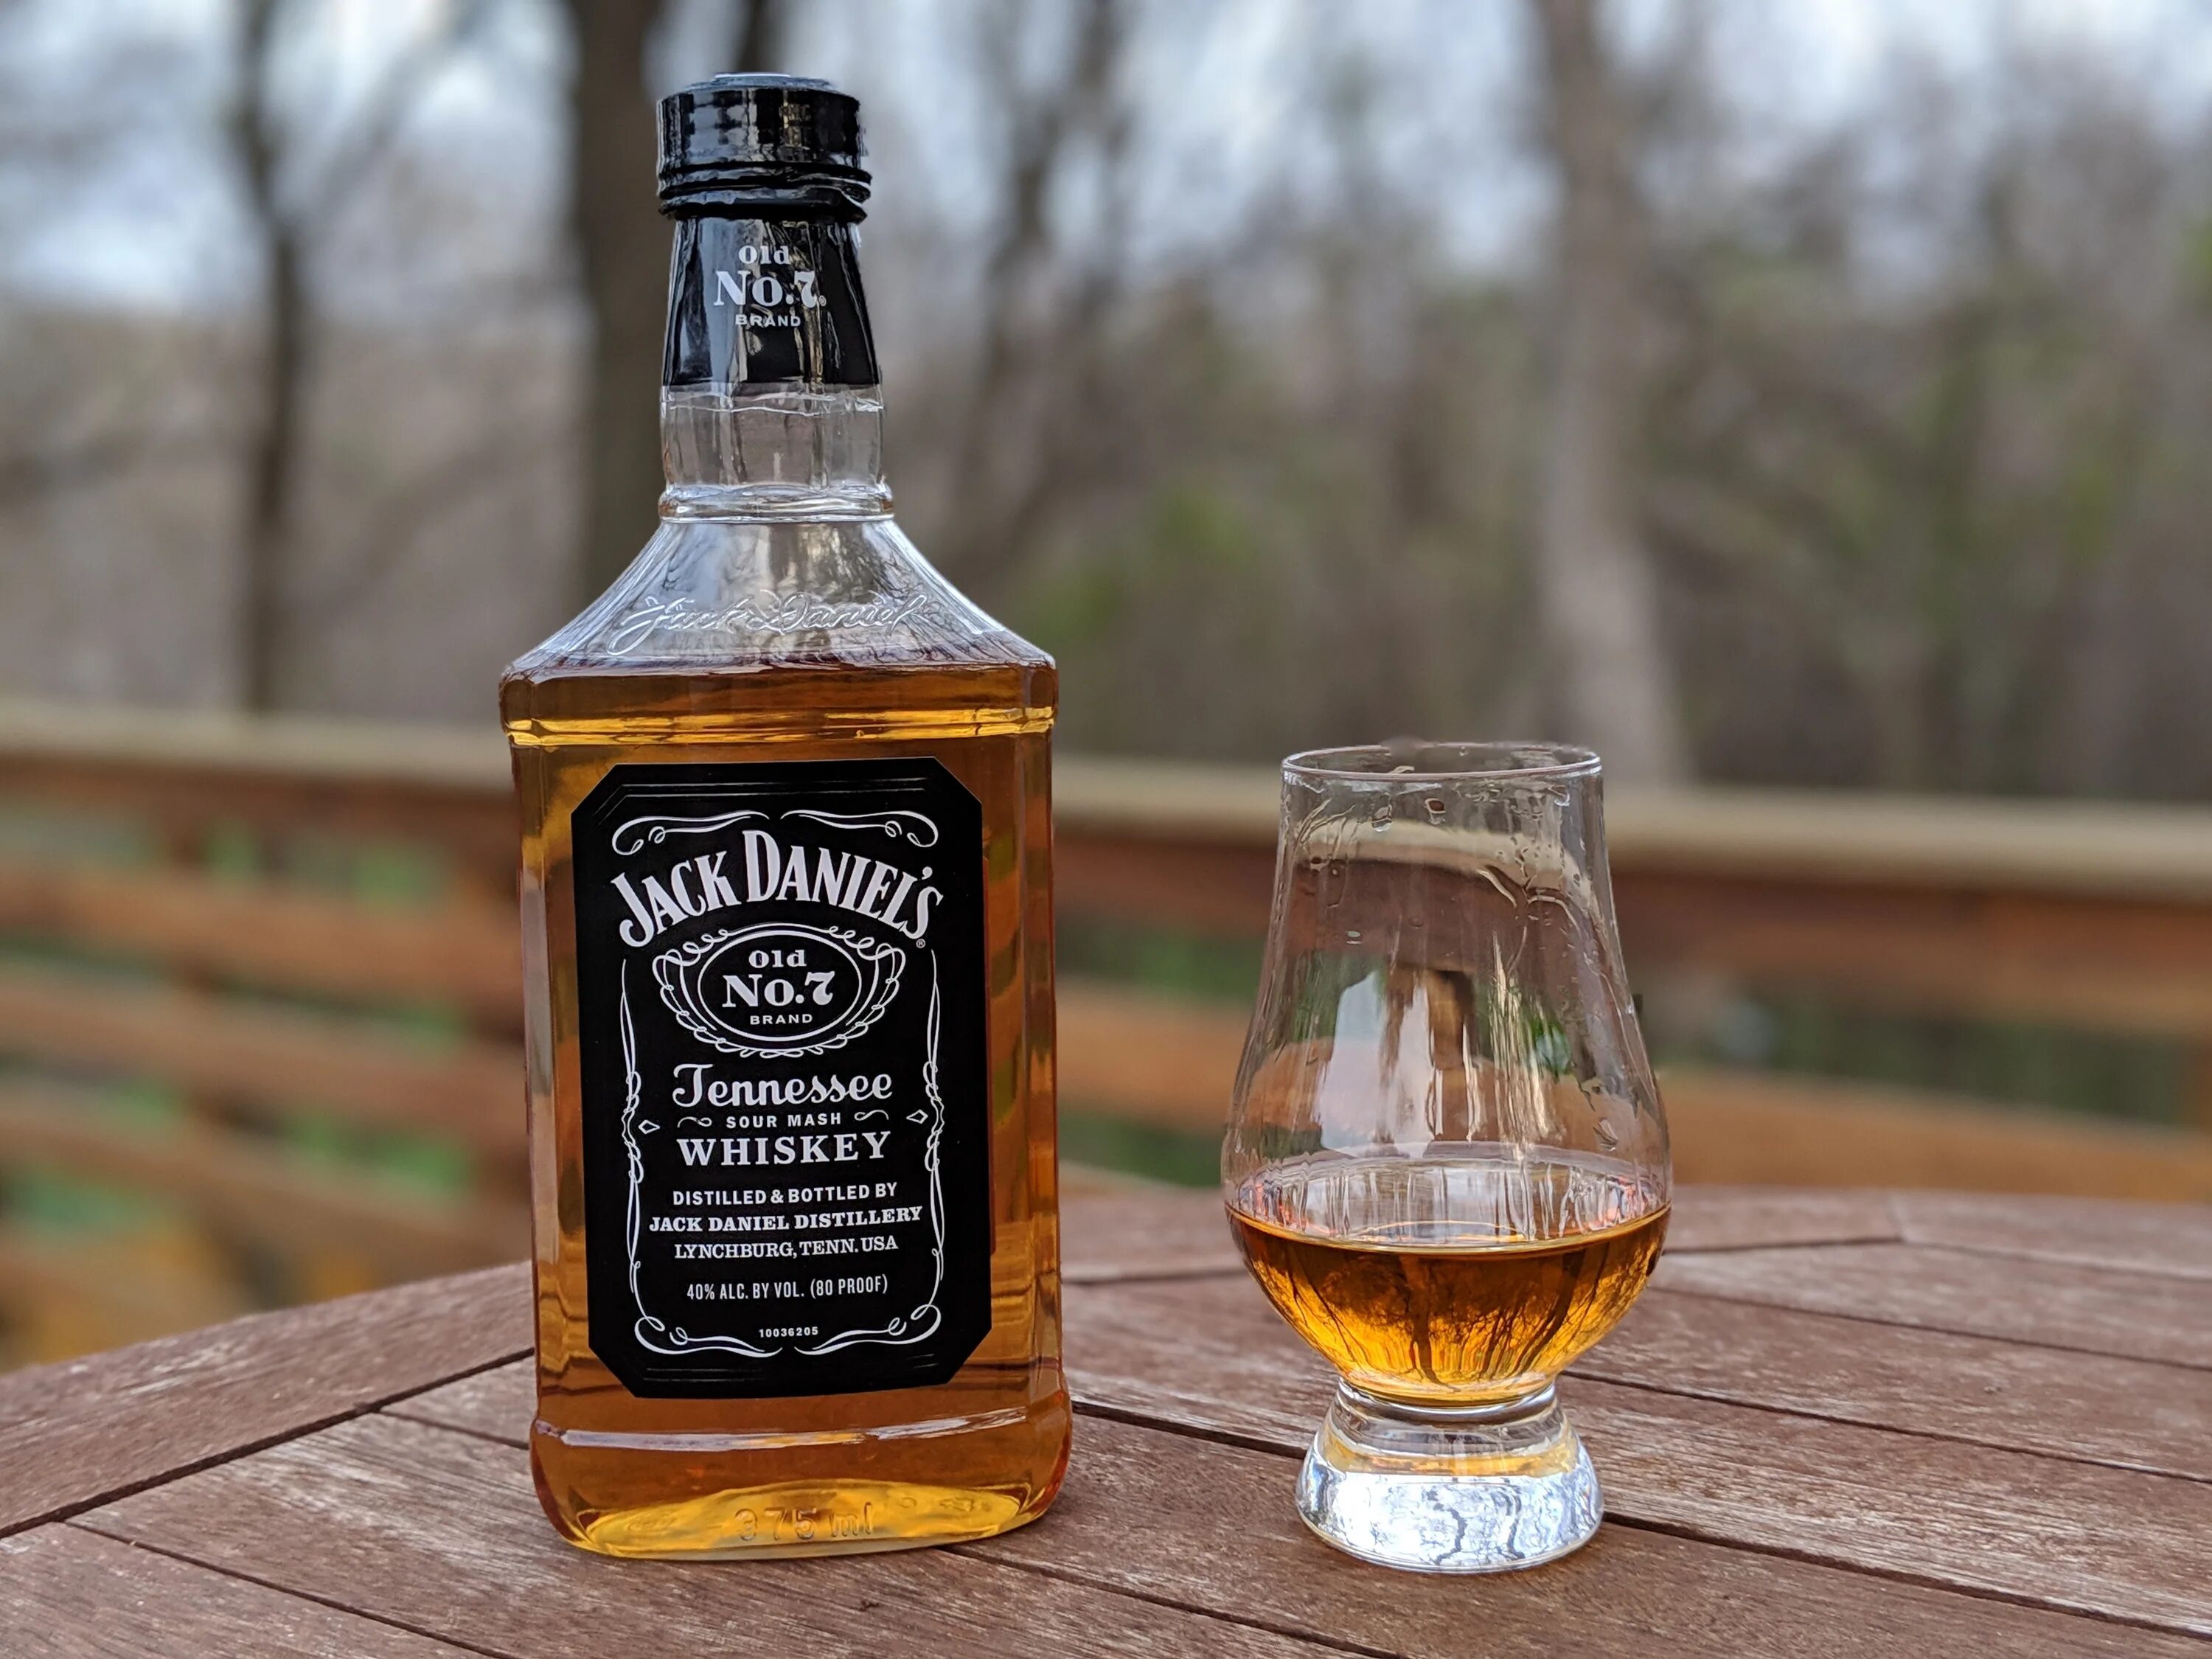 Джек дэниэлс это. Виски Джек Дэниэлс. Виски Джек Дэниэлс Теннесси. Джек Дэниел'с Теннесси виски. Джек Дэниэлс Теннесси виски 1 литр.